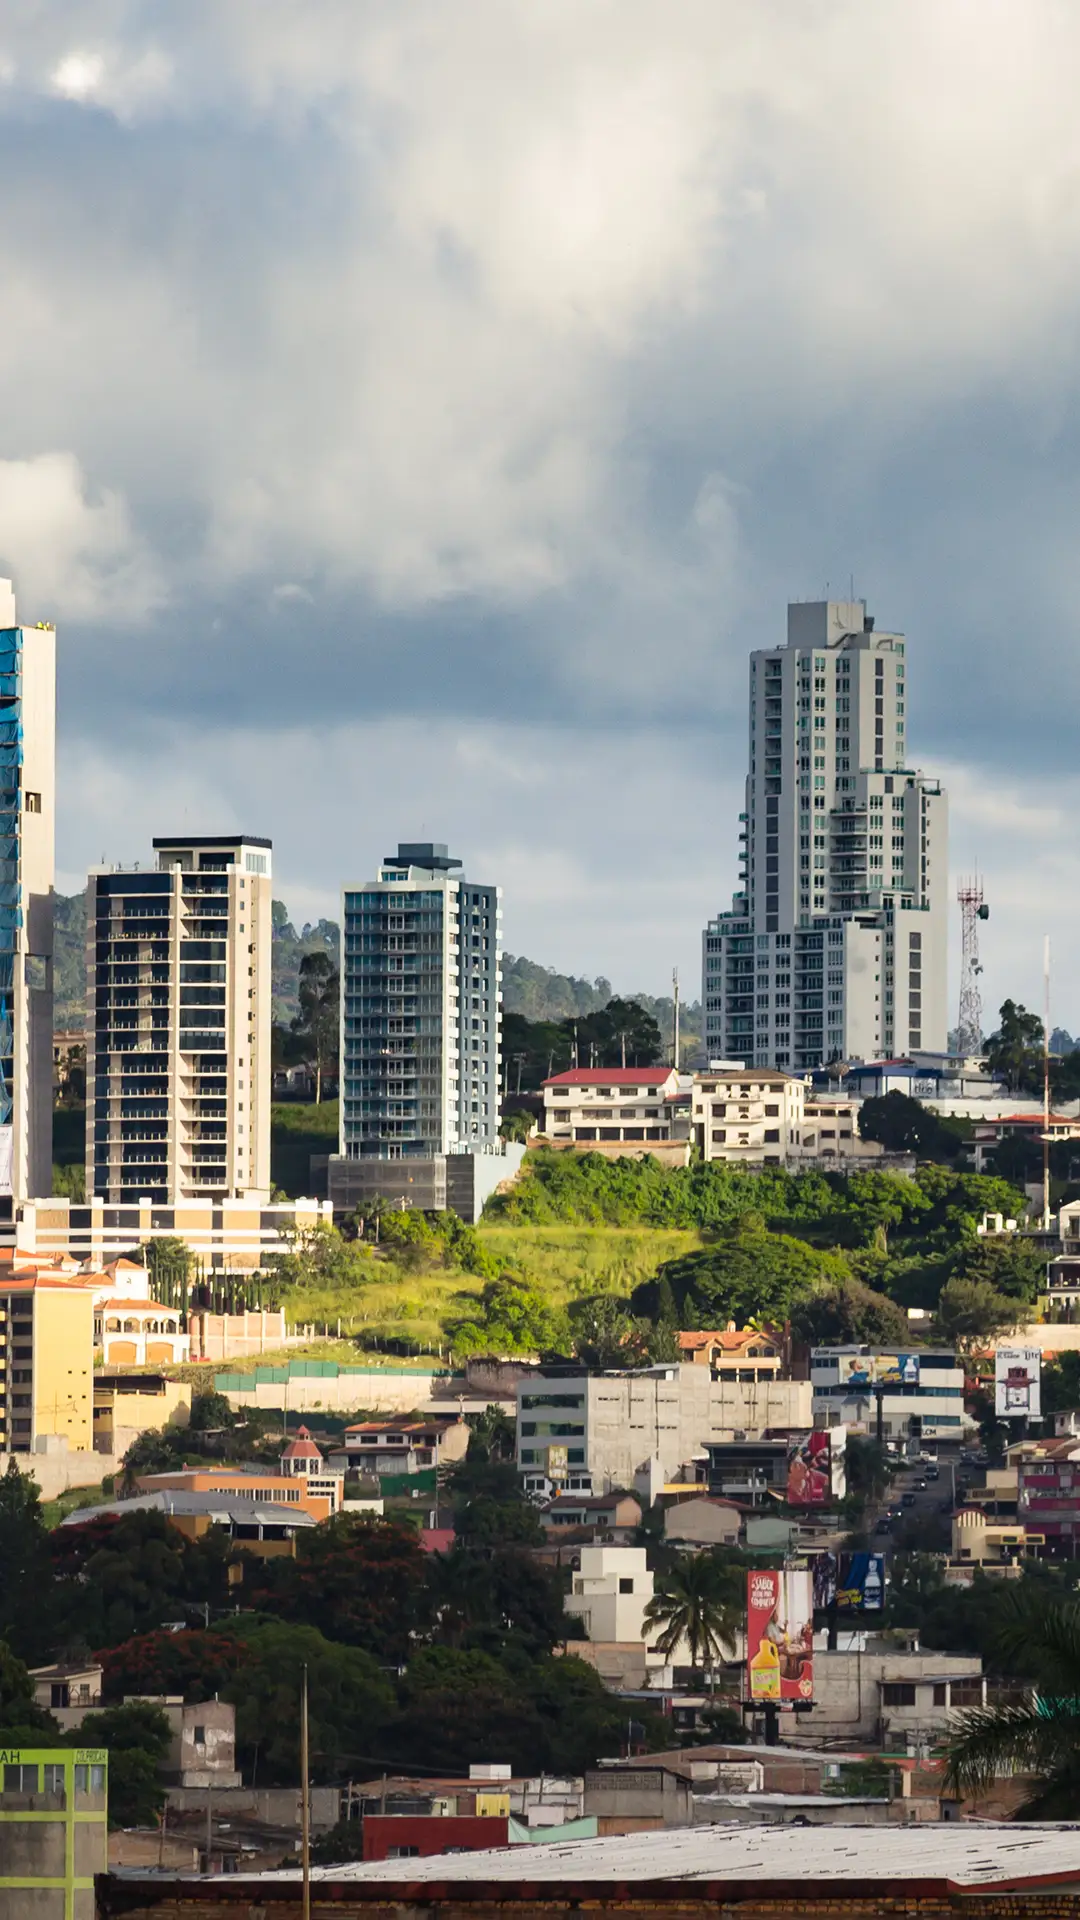 Buildings in Tegucigalpa, Honduras.